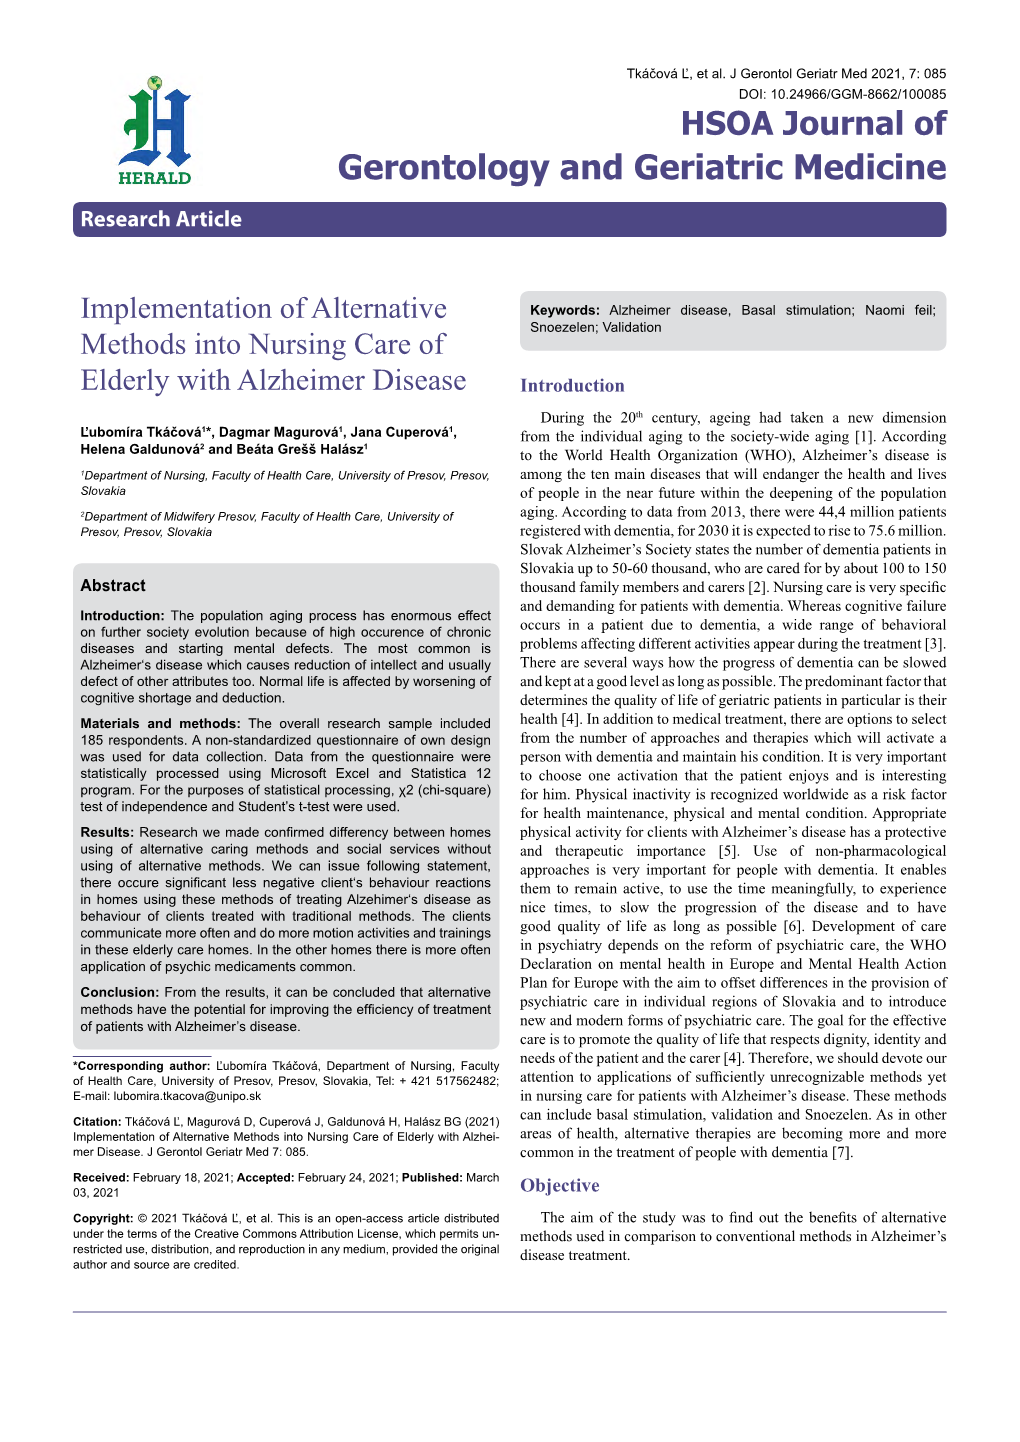 Implementation of Alternative Methods Into Nursing Care of Elderly with Alzheimer Disease